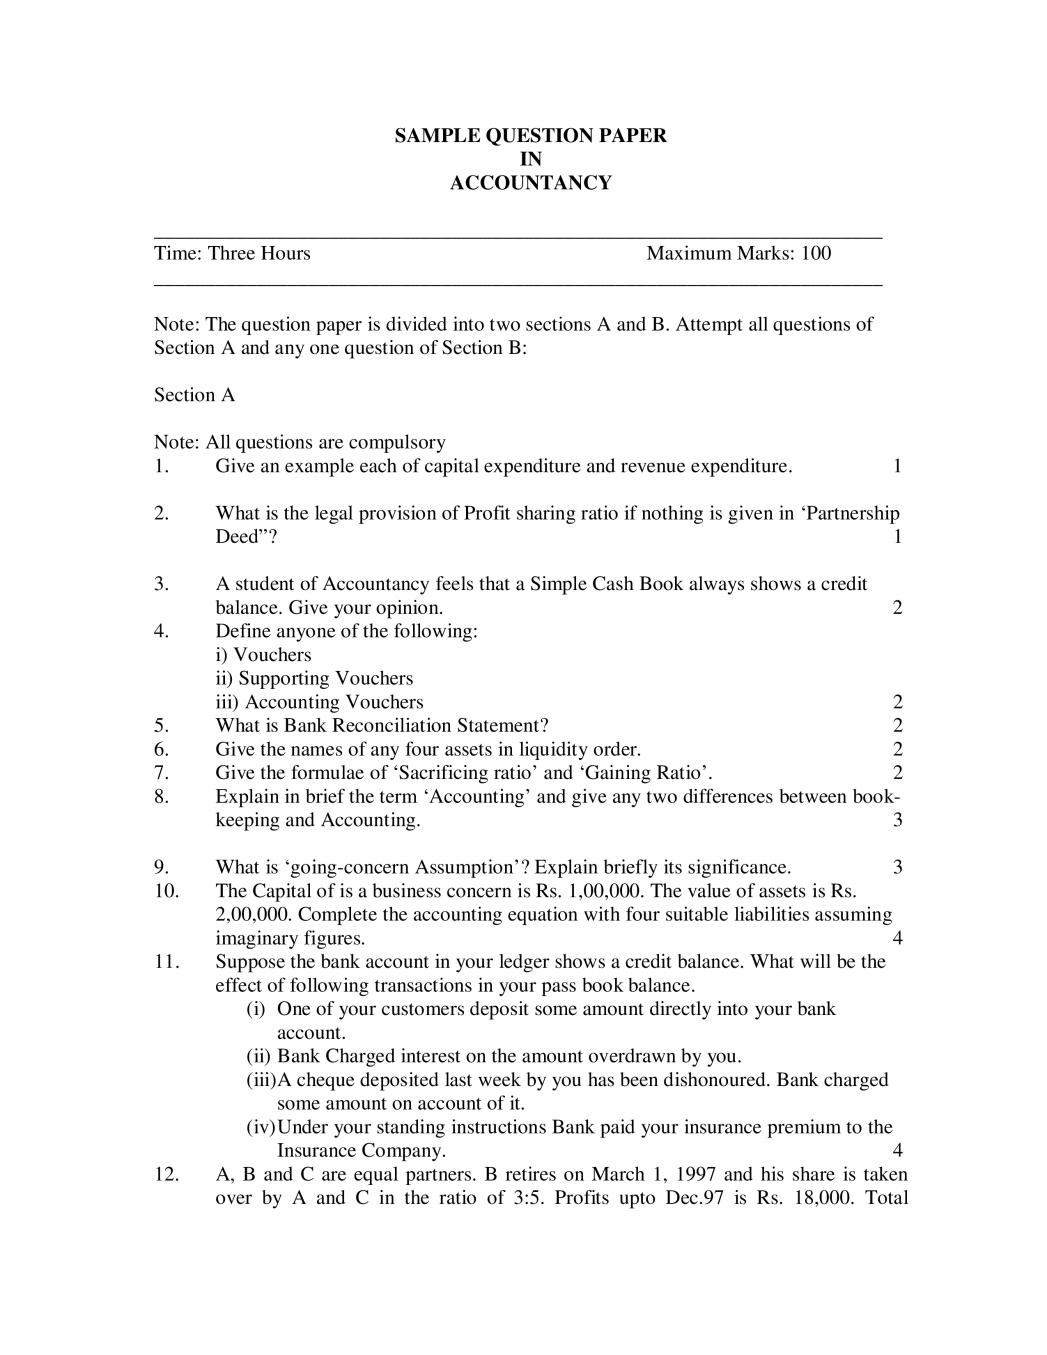 NIOS Class 12 Sample Paper 2020 - Accountancy - Page 1